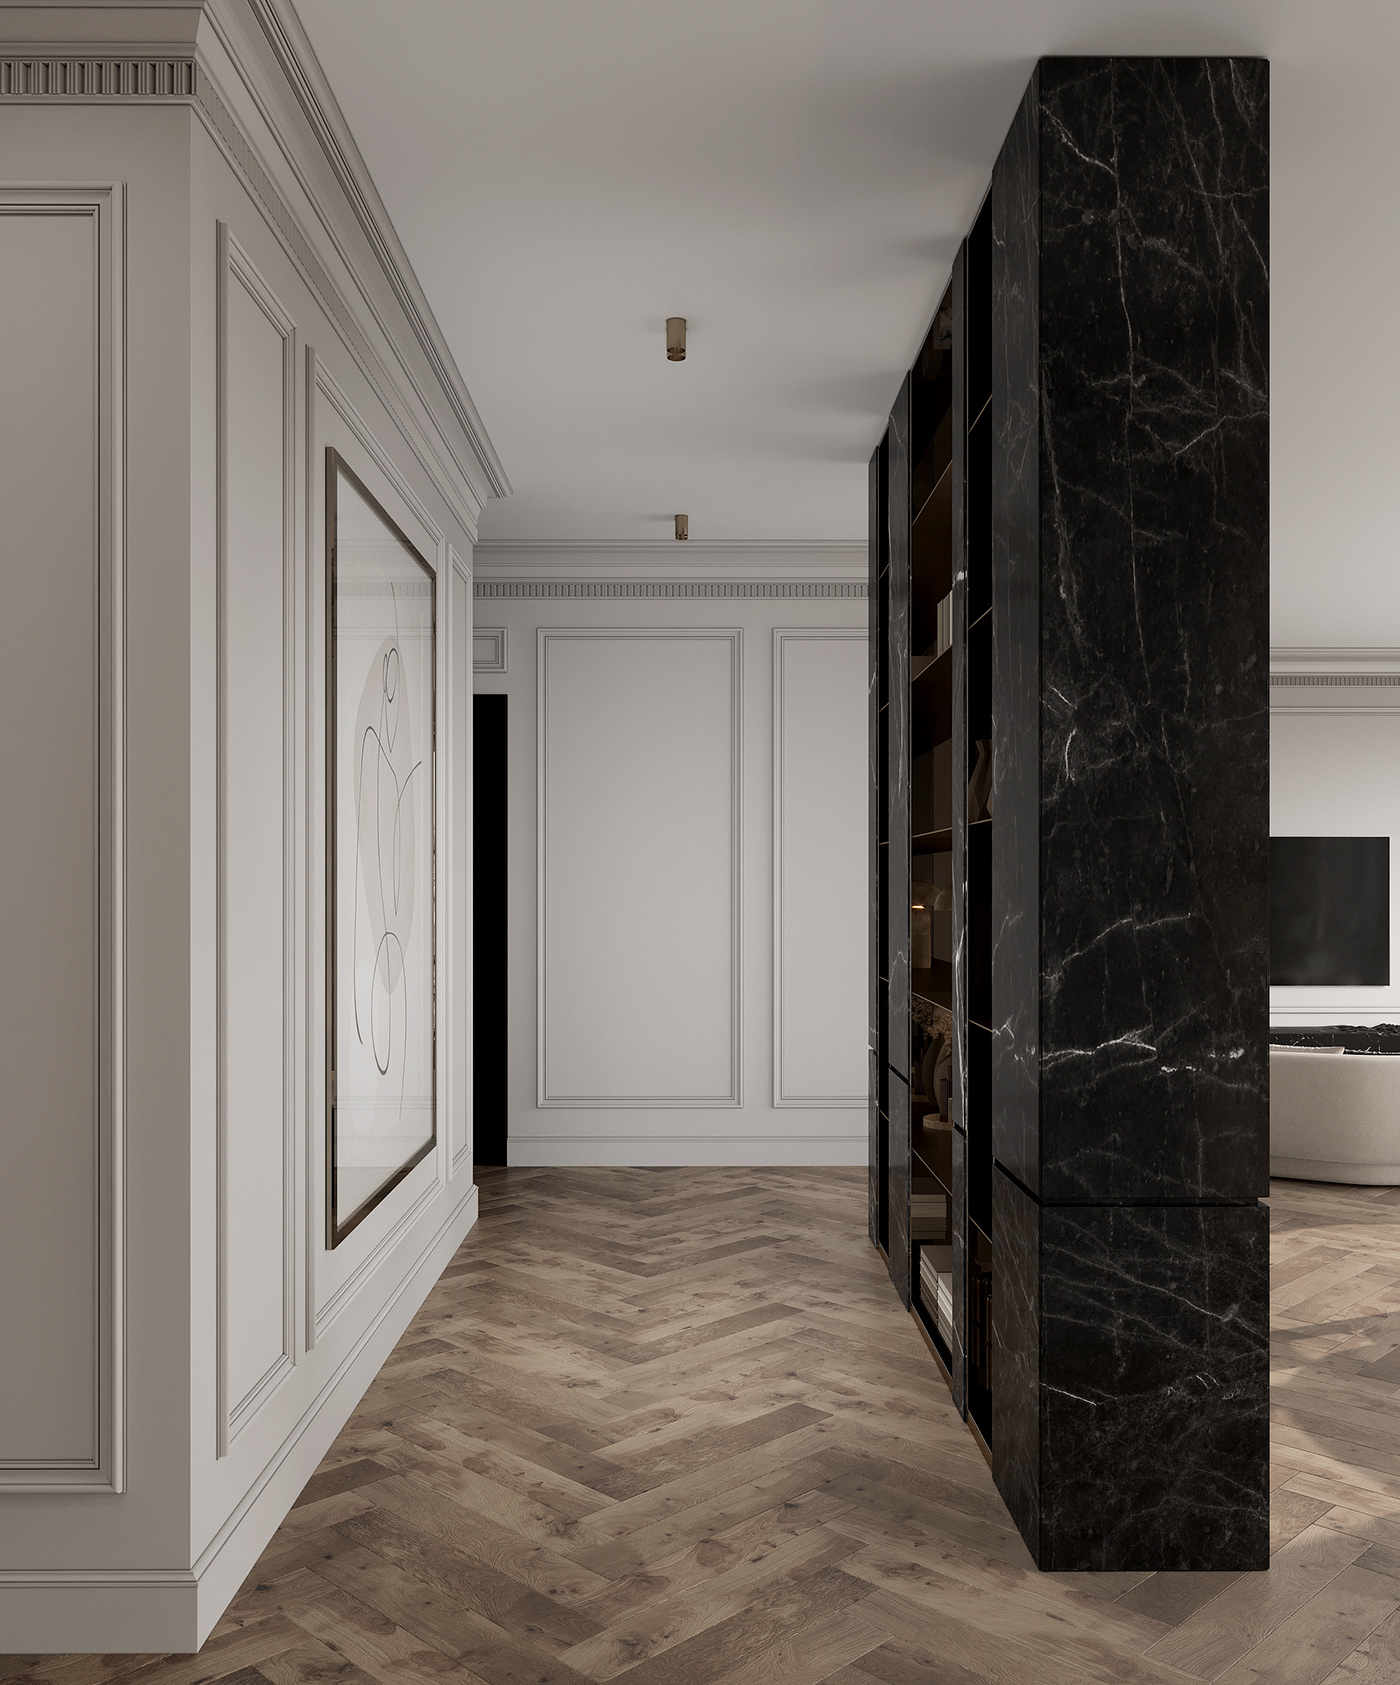 3D 3ds max architecture corona interior design  kitchen design living room modern Render visualization